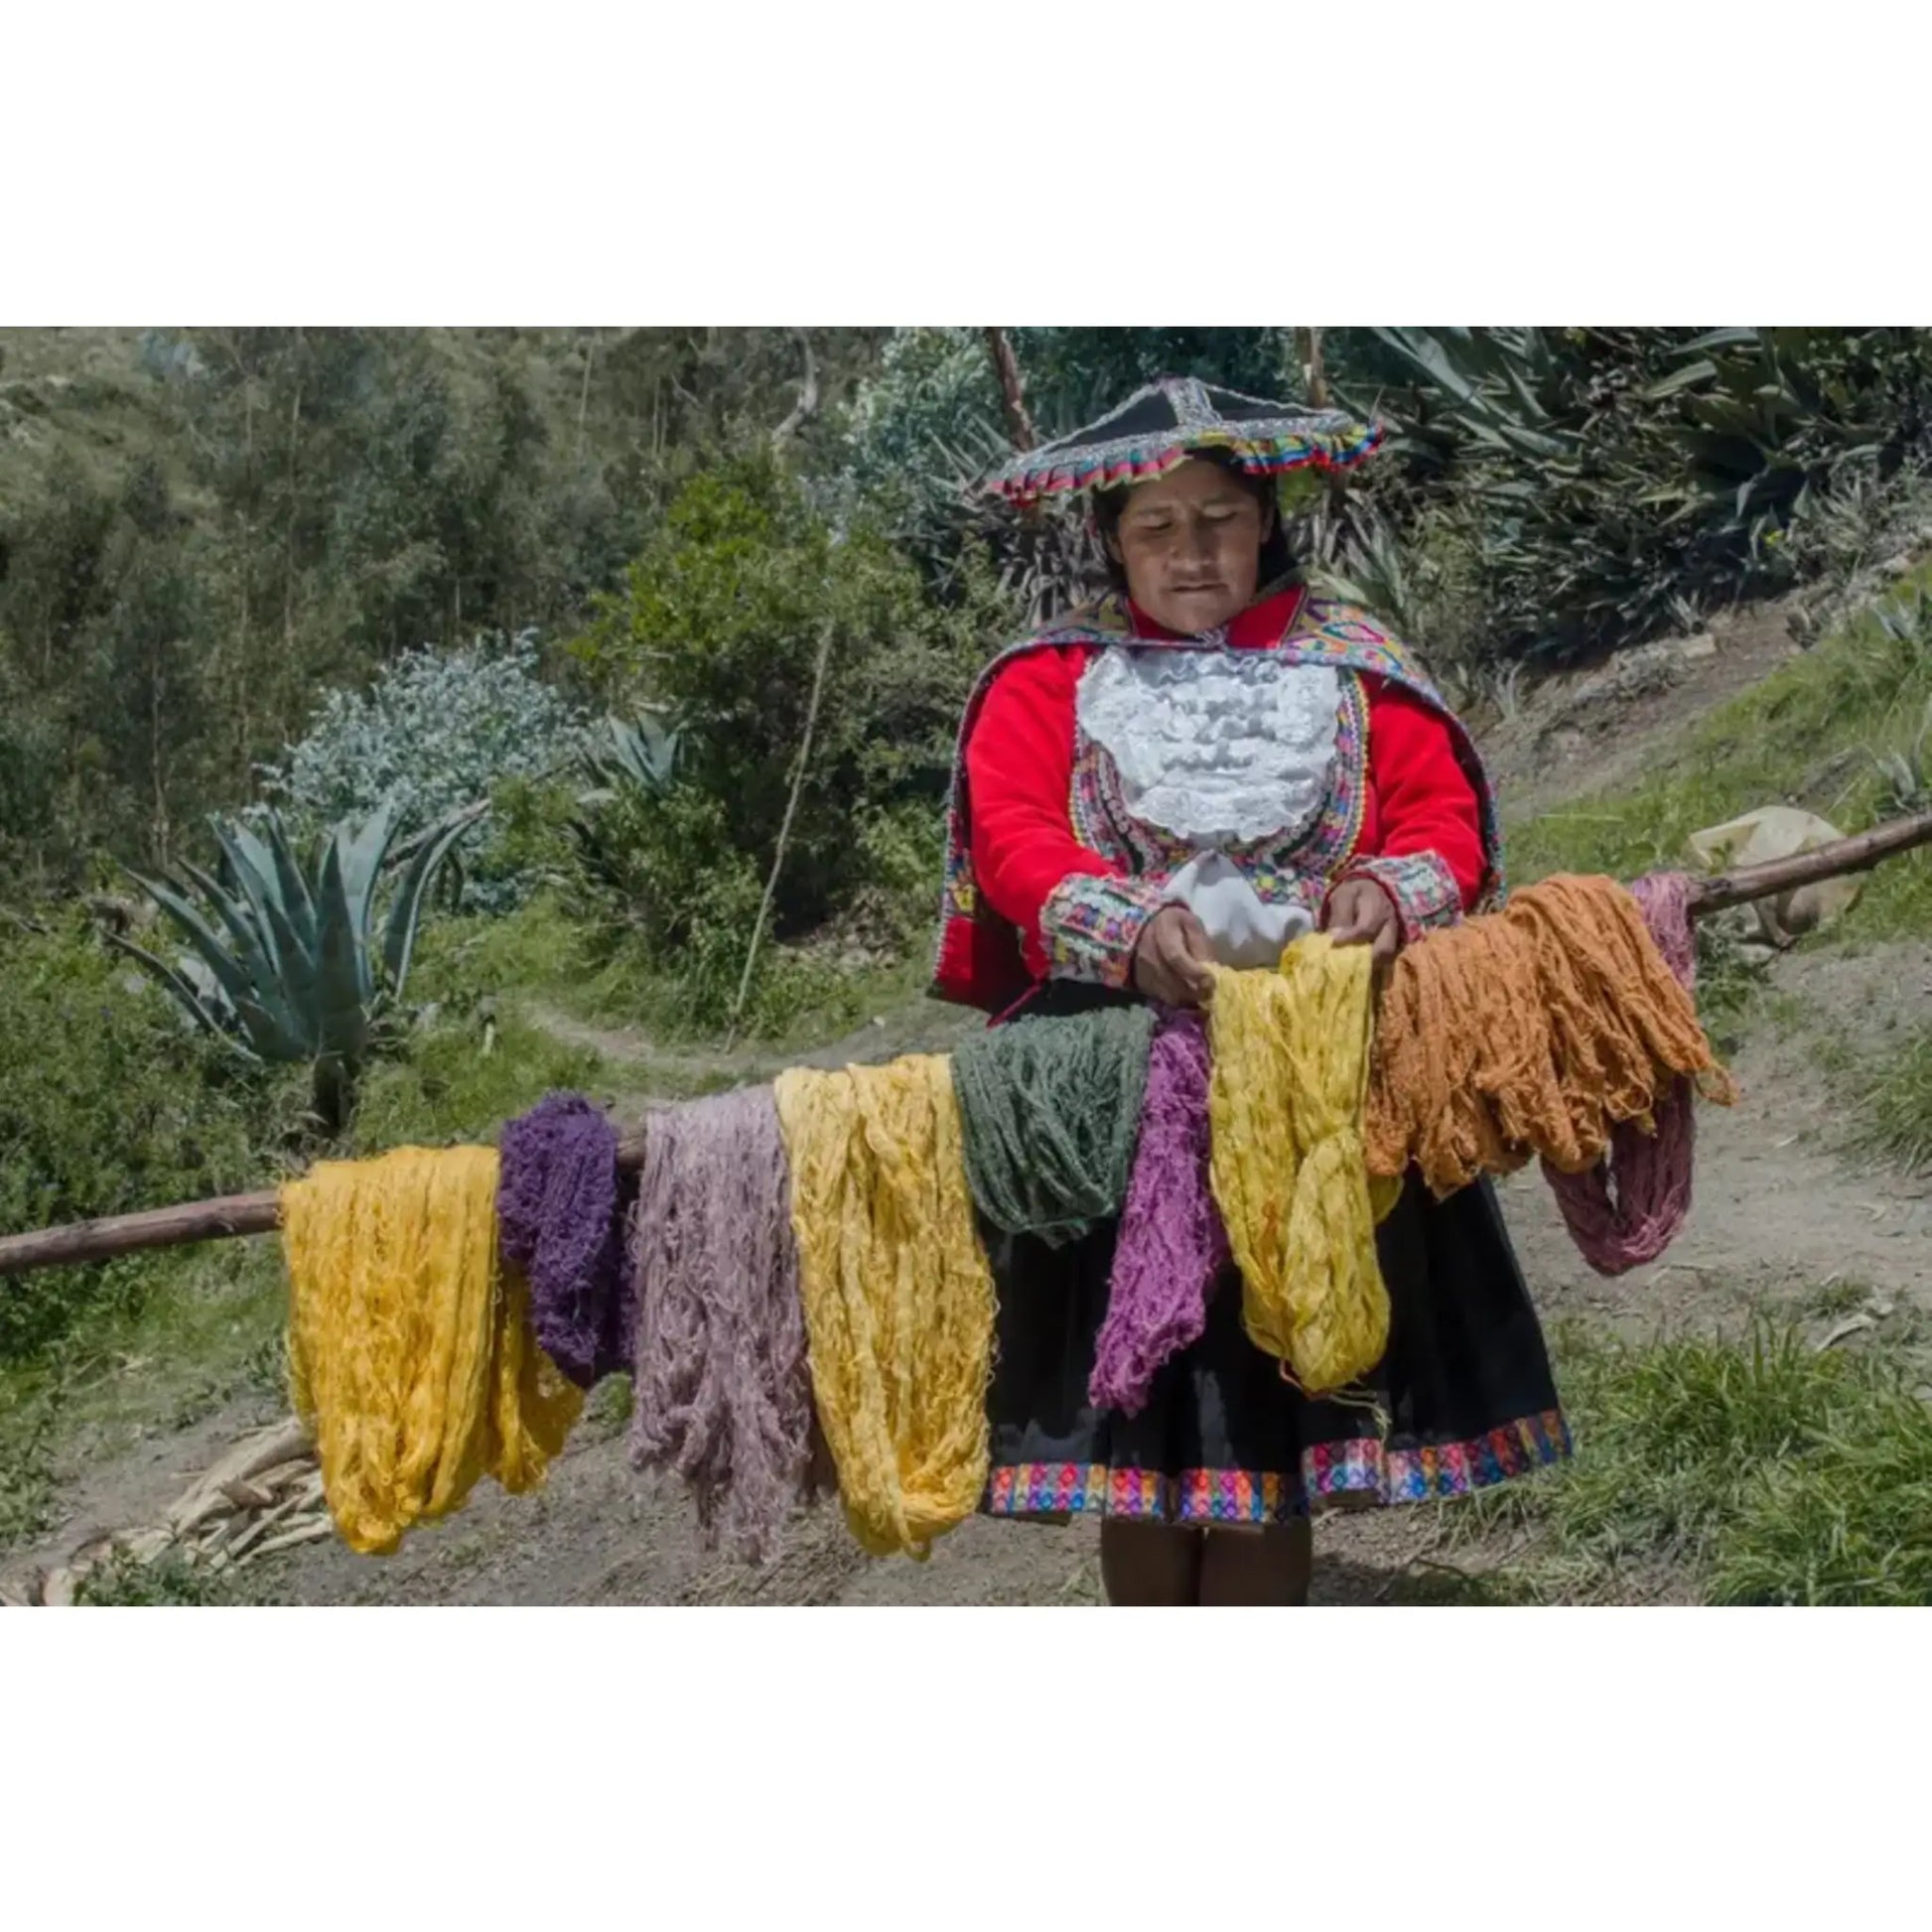 Peruvian Rainbow - hand-loomed wool clutch